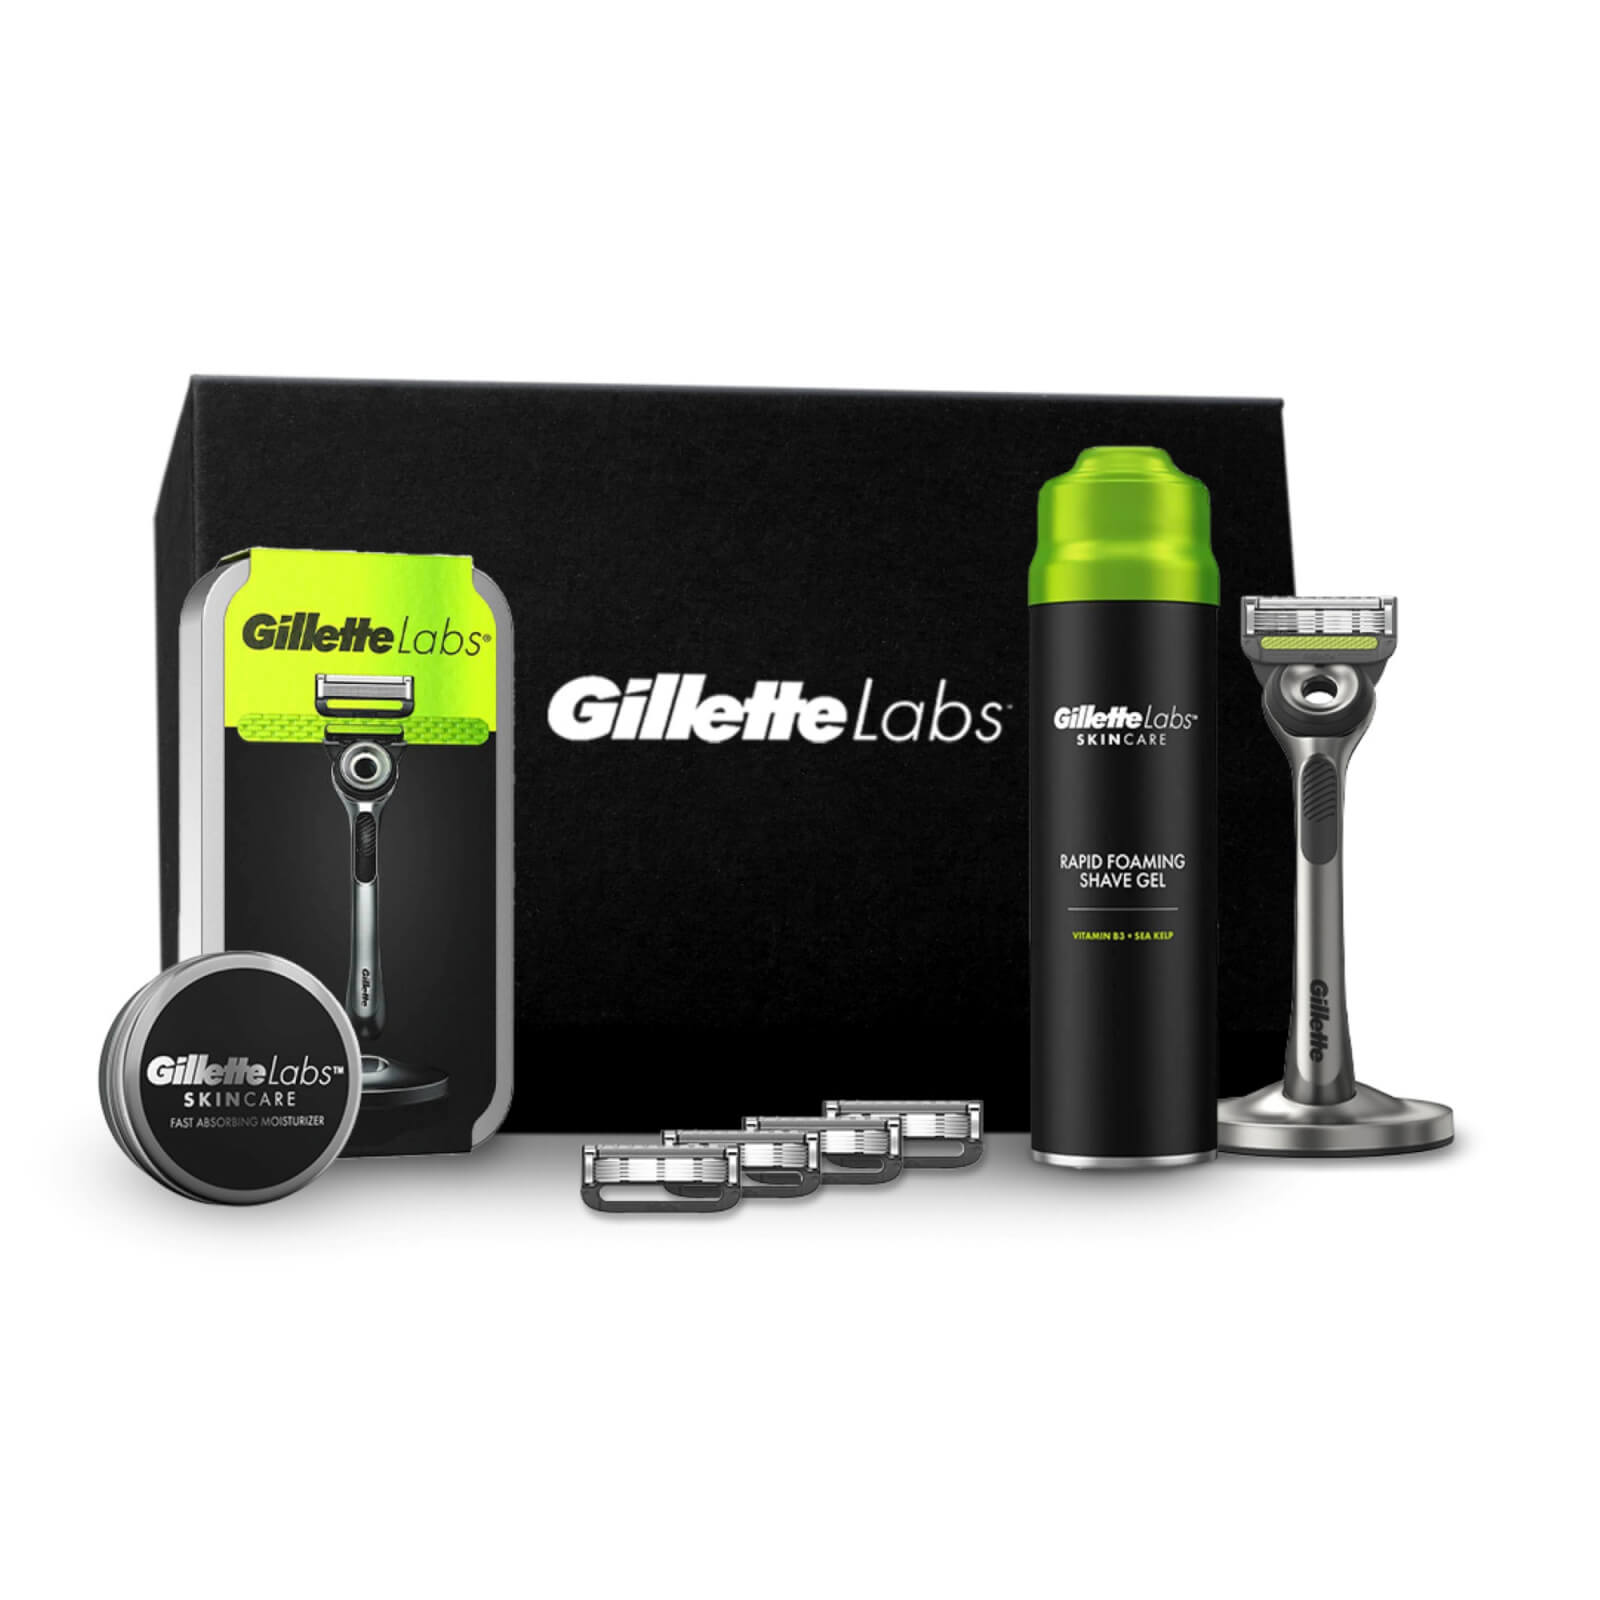 Gillette Labs Giftset - The ultimate shave regime